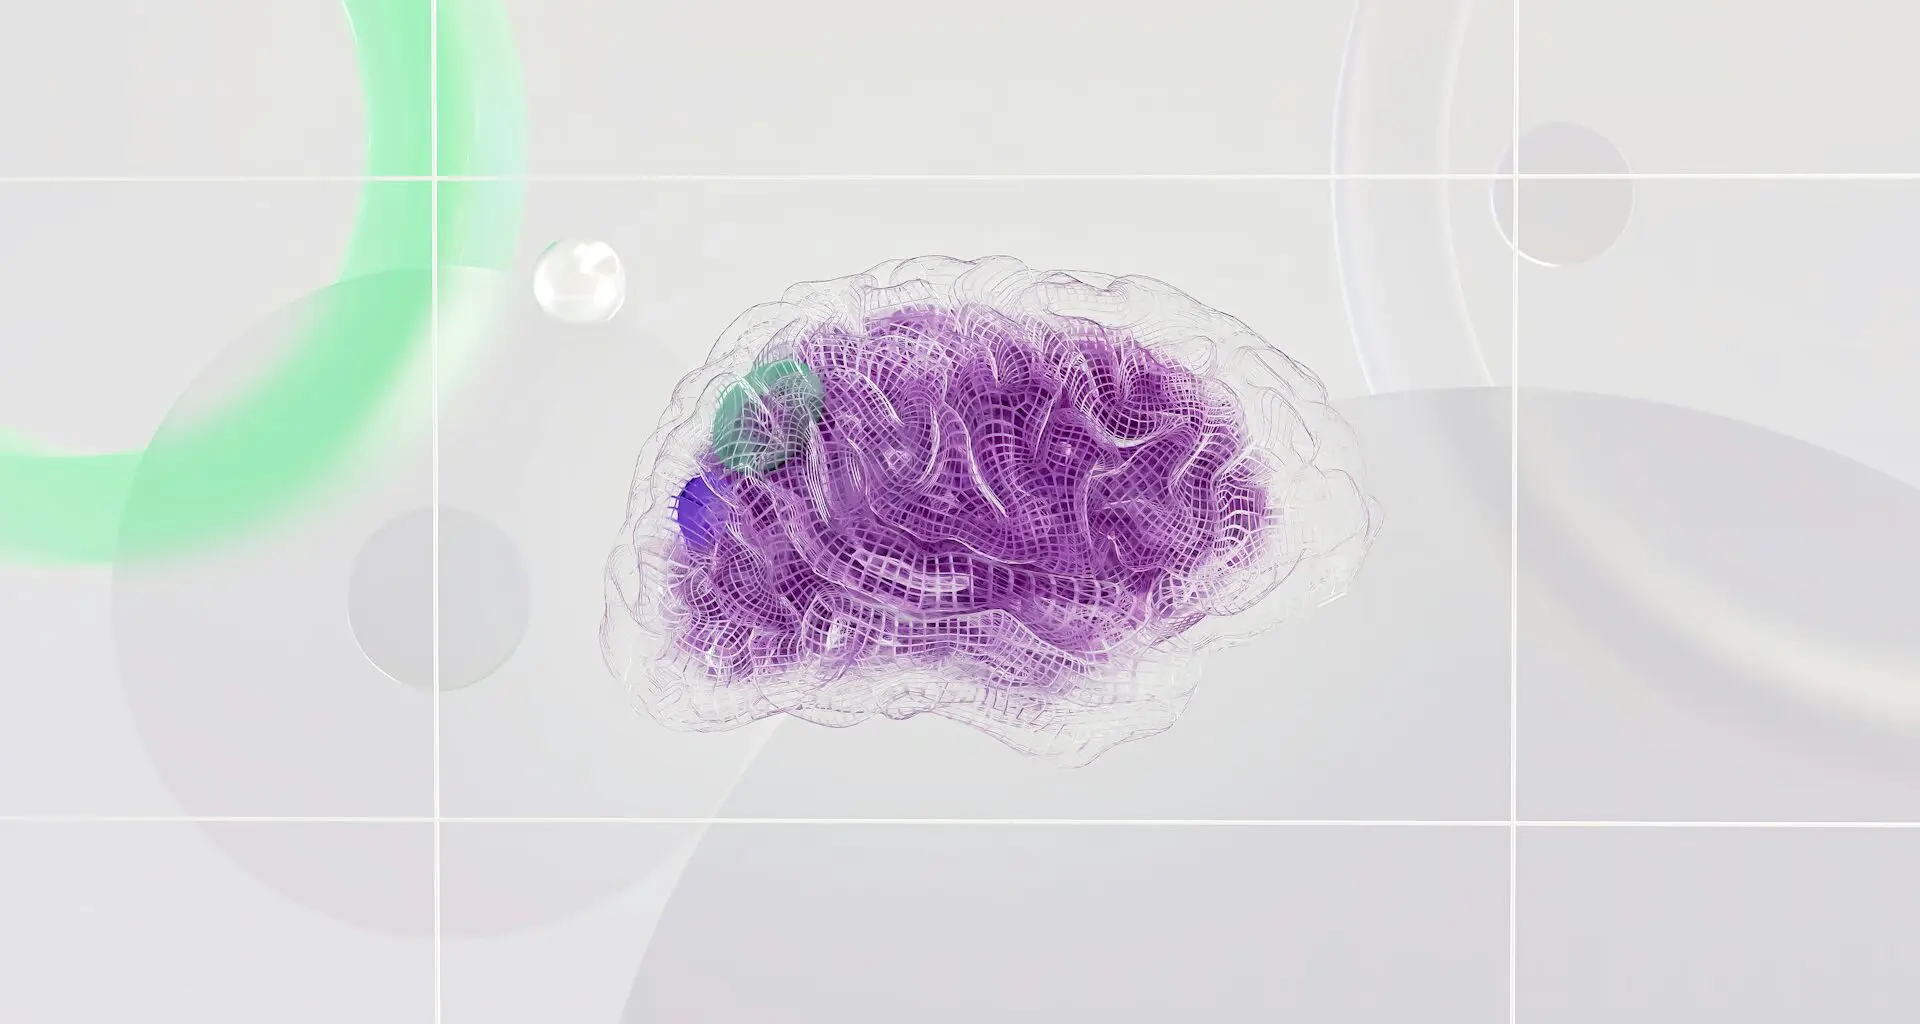 A close-up image of a purple brain.